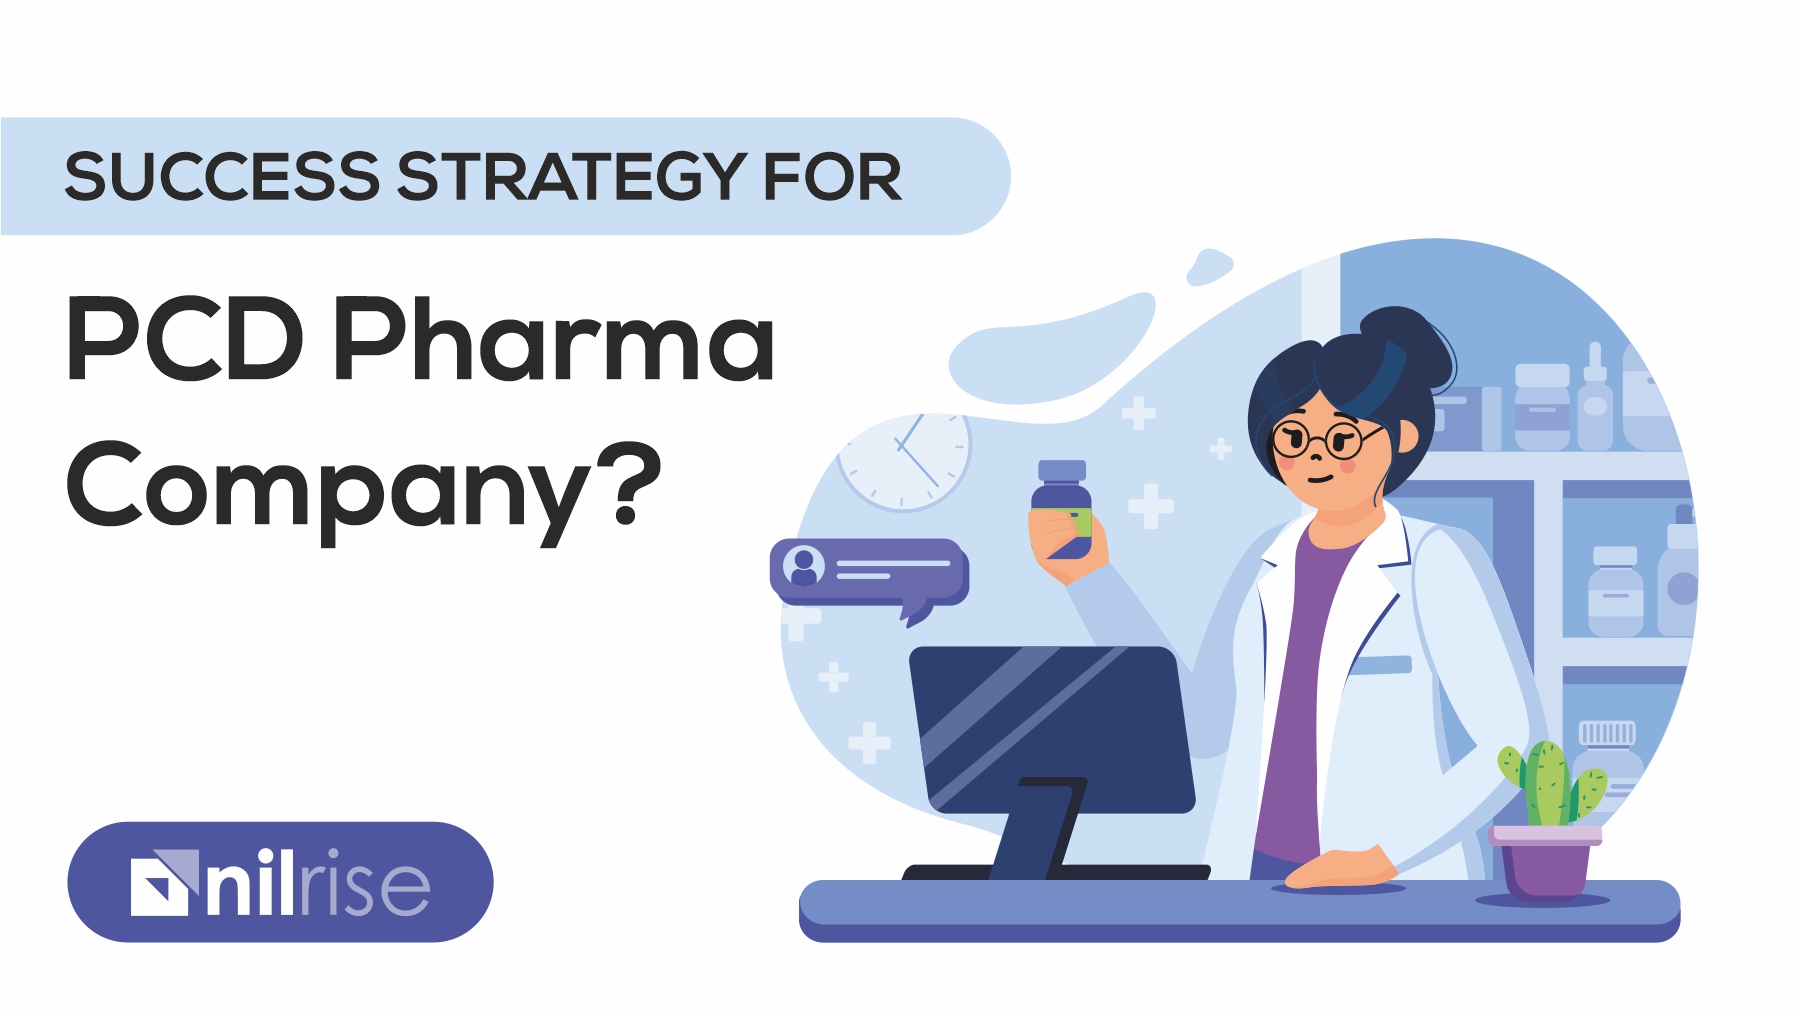 Success strategy for PCD Pharma Company